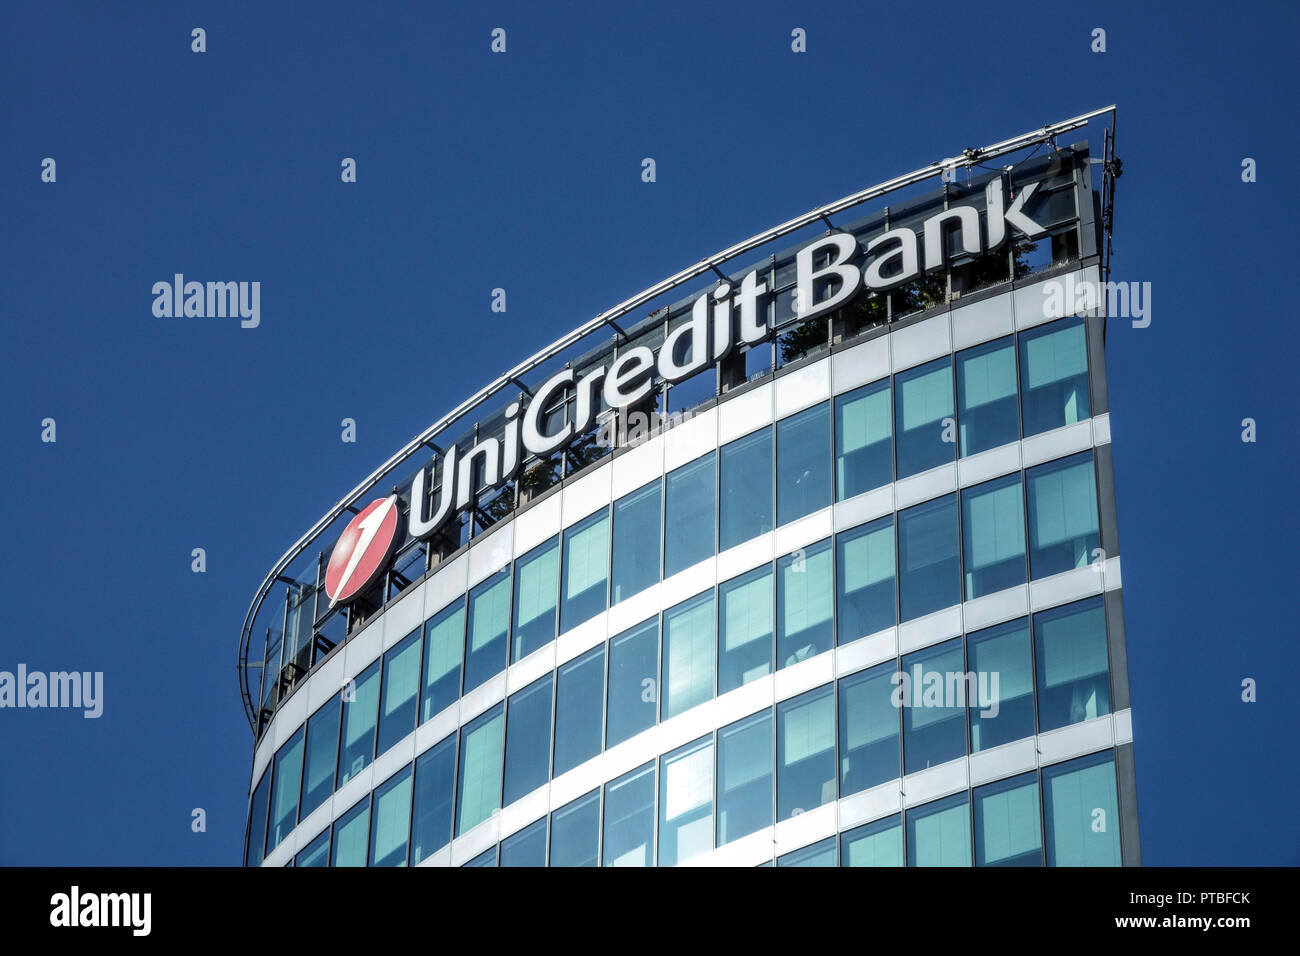 UniCredit Bank Logo, Prag, Tschechische Republik Stockfoto